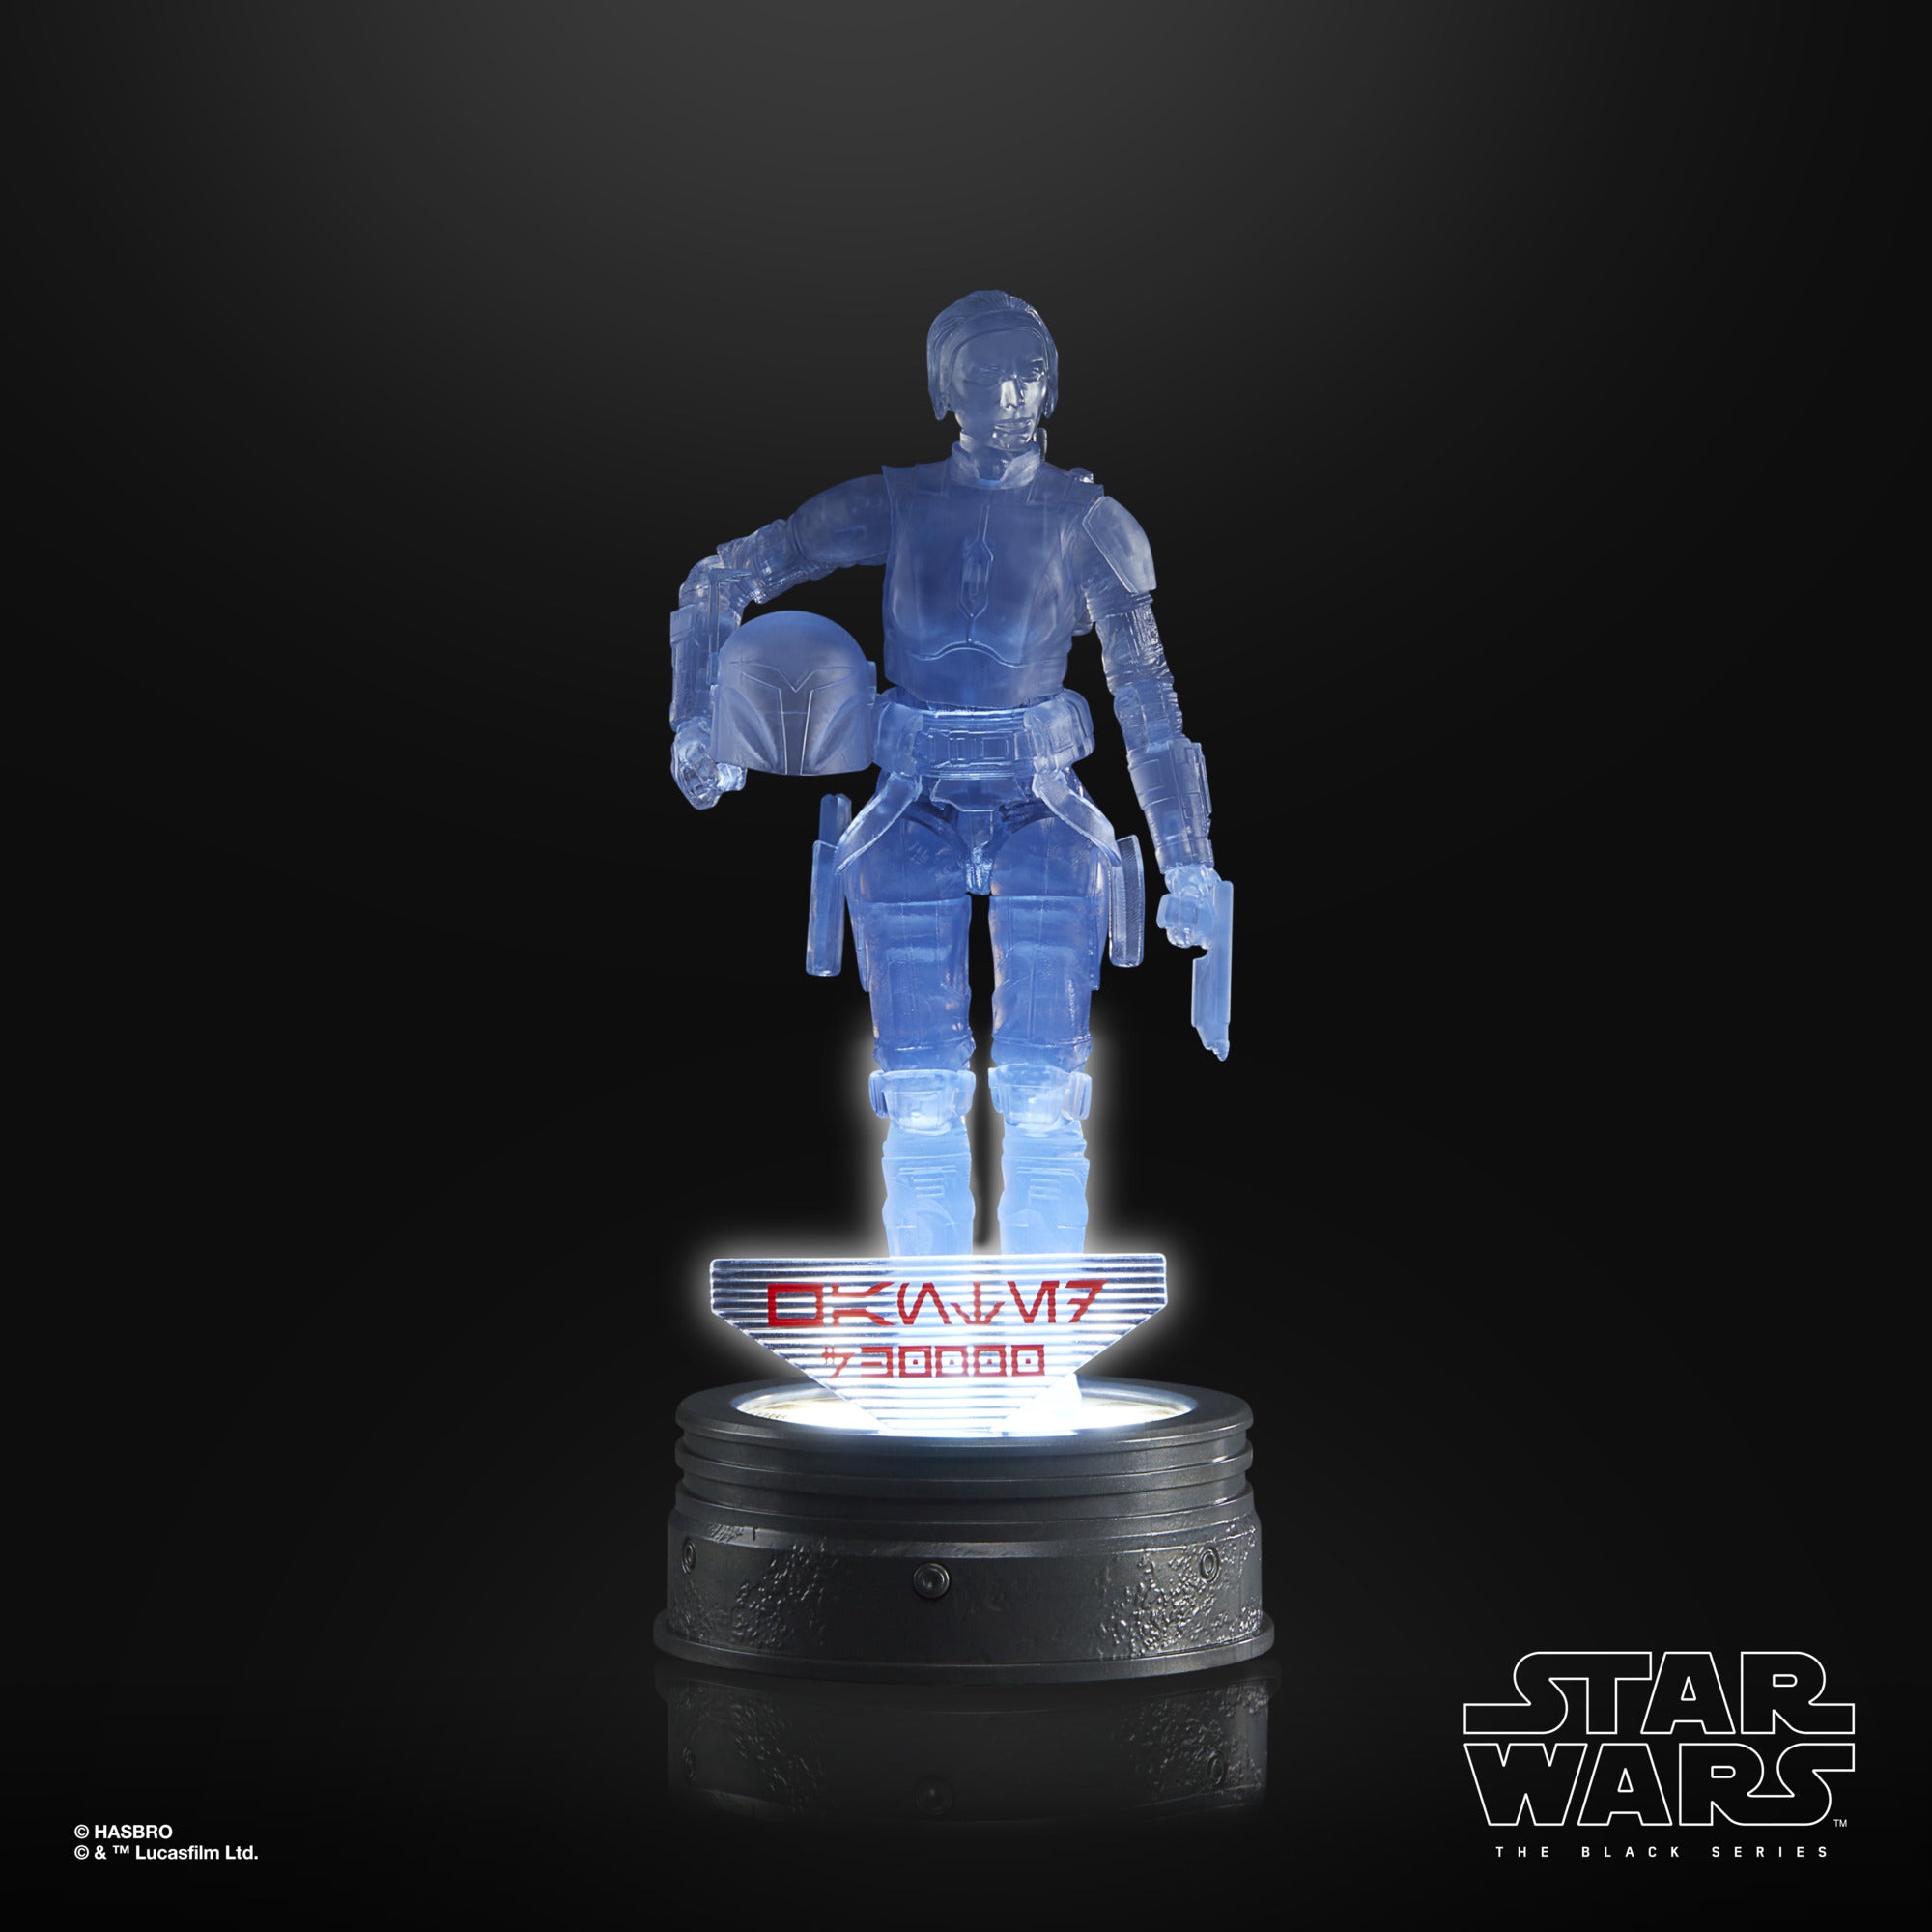 Star Wars - Black Series Figurine Axe Woves 15 cm (The Mandalorian